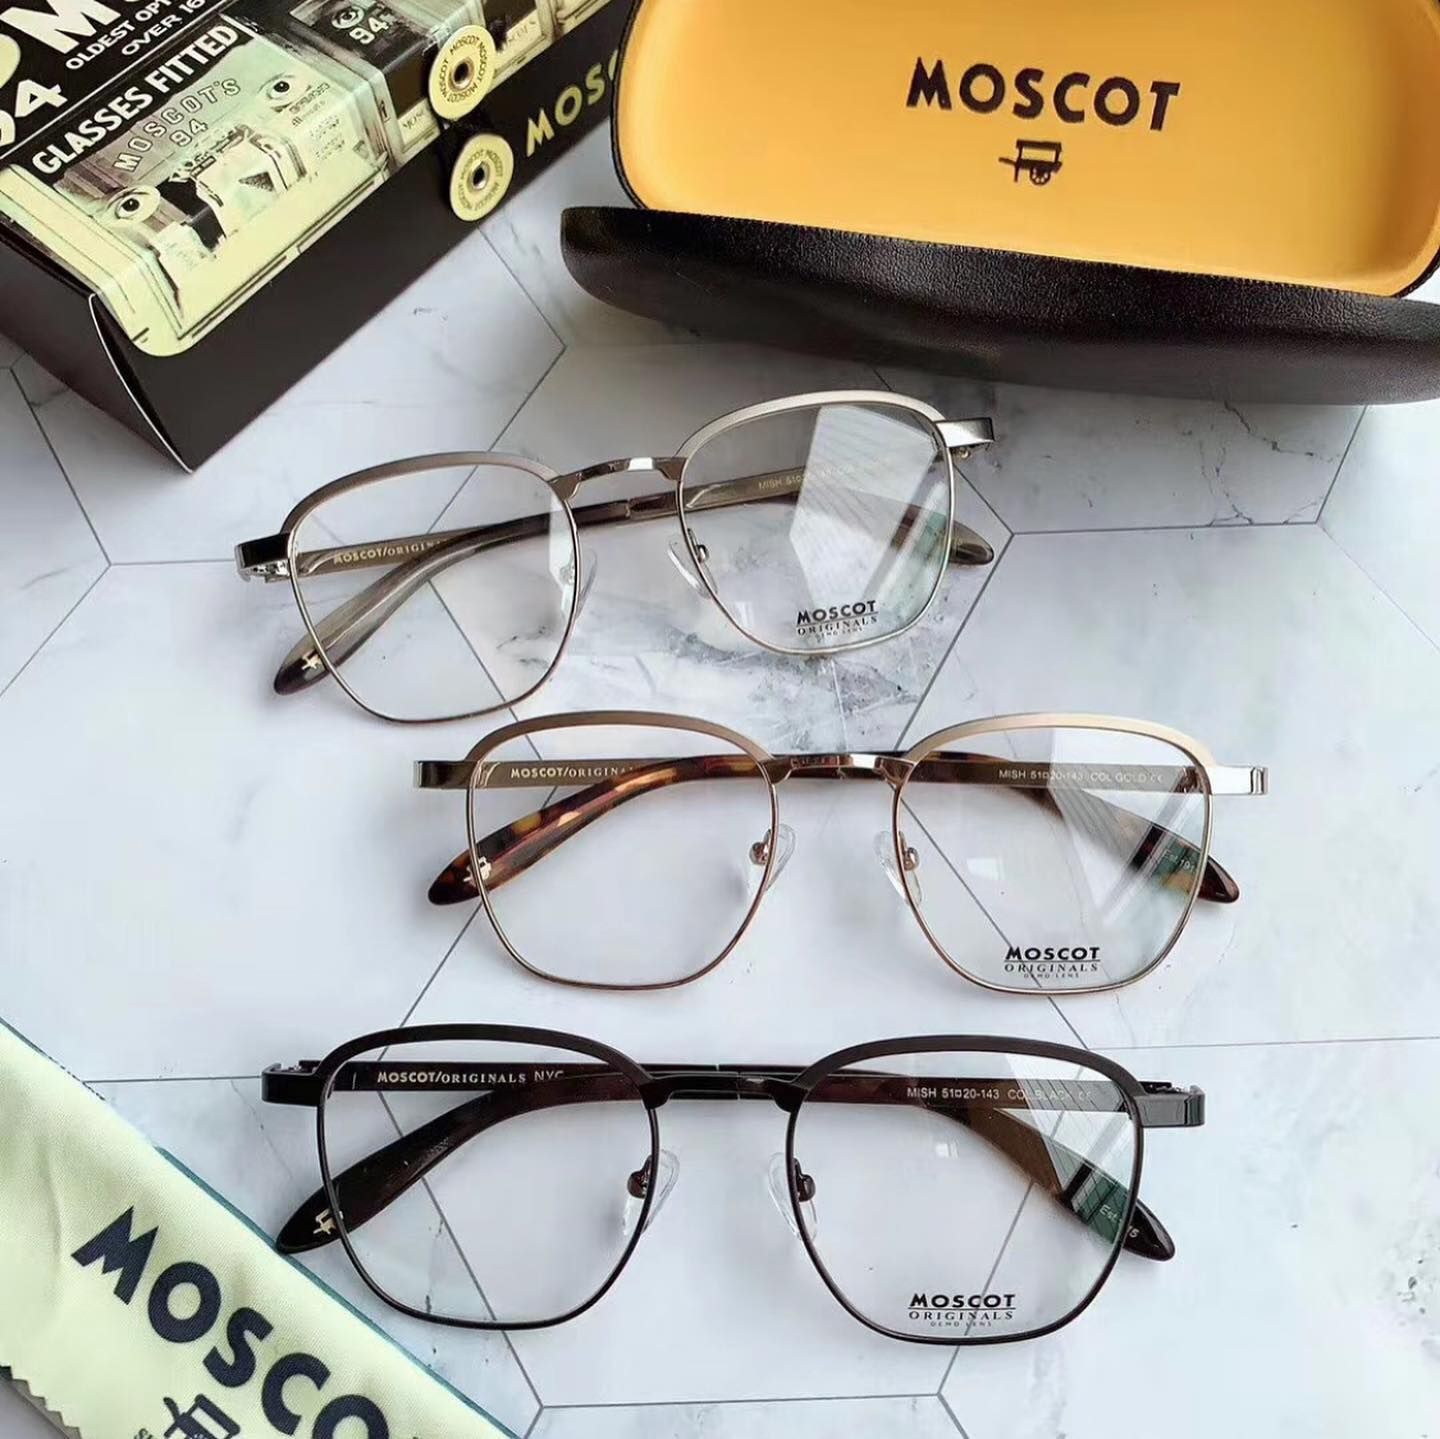  Moscot MISH eyeglasses - black frame 